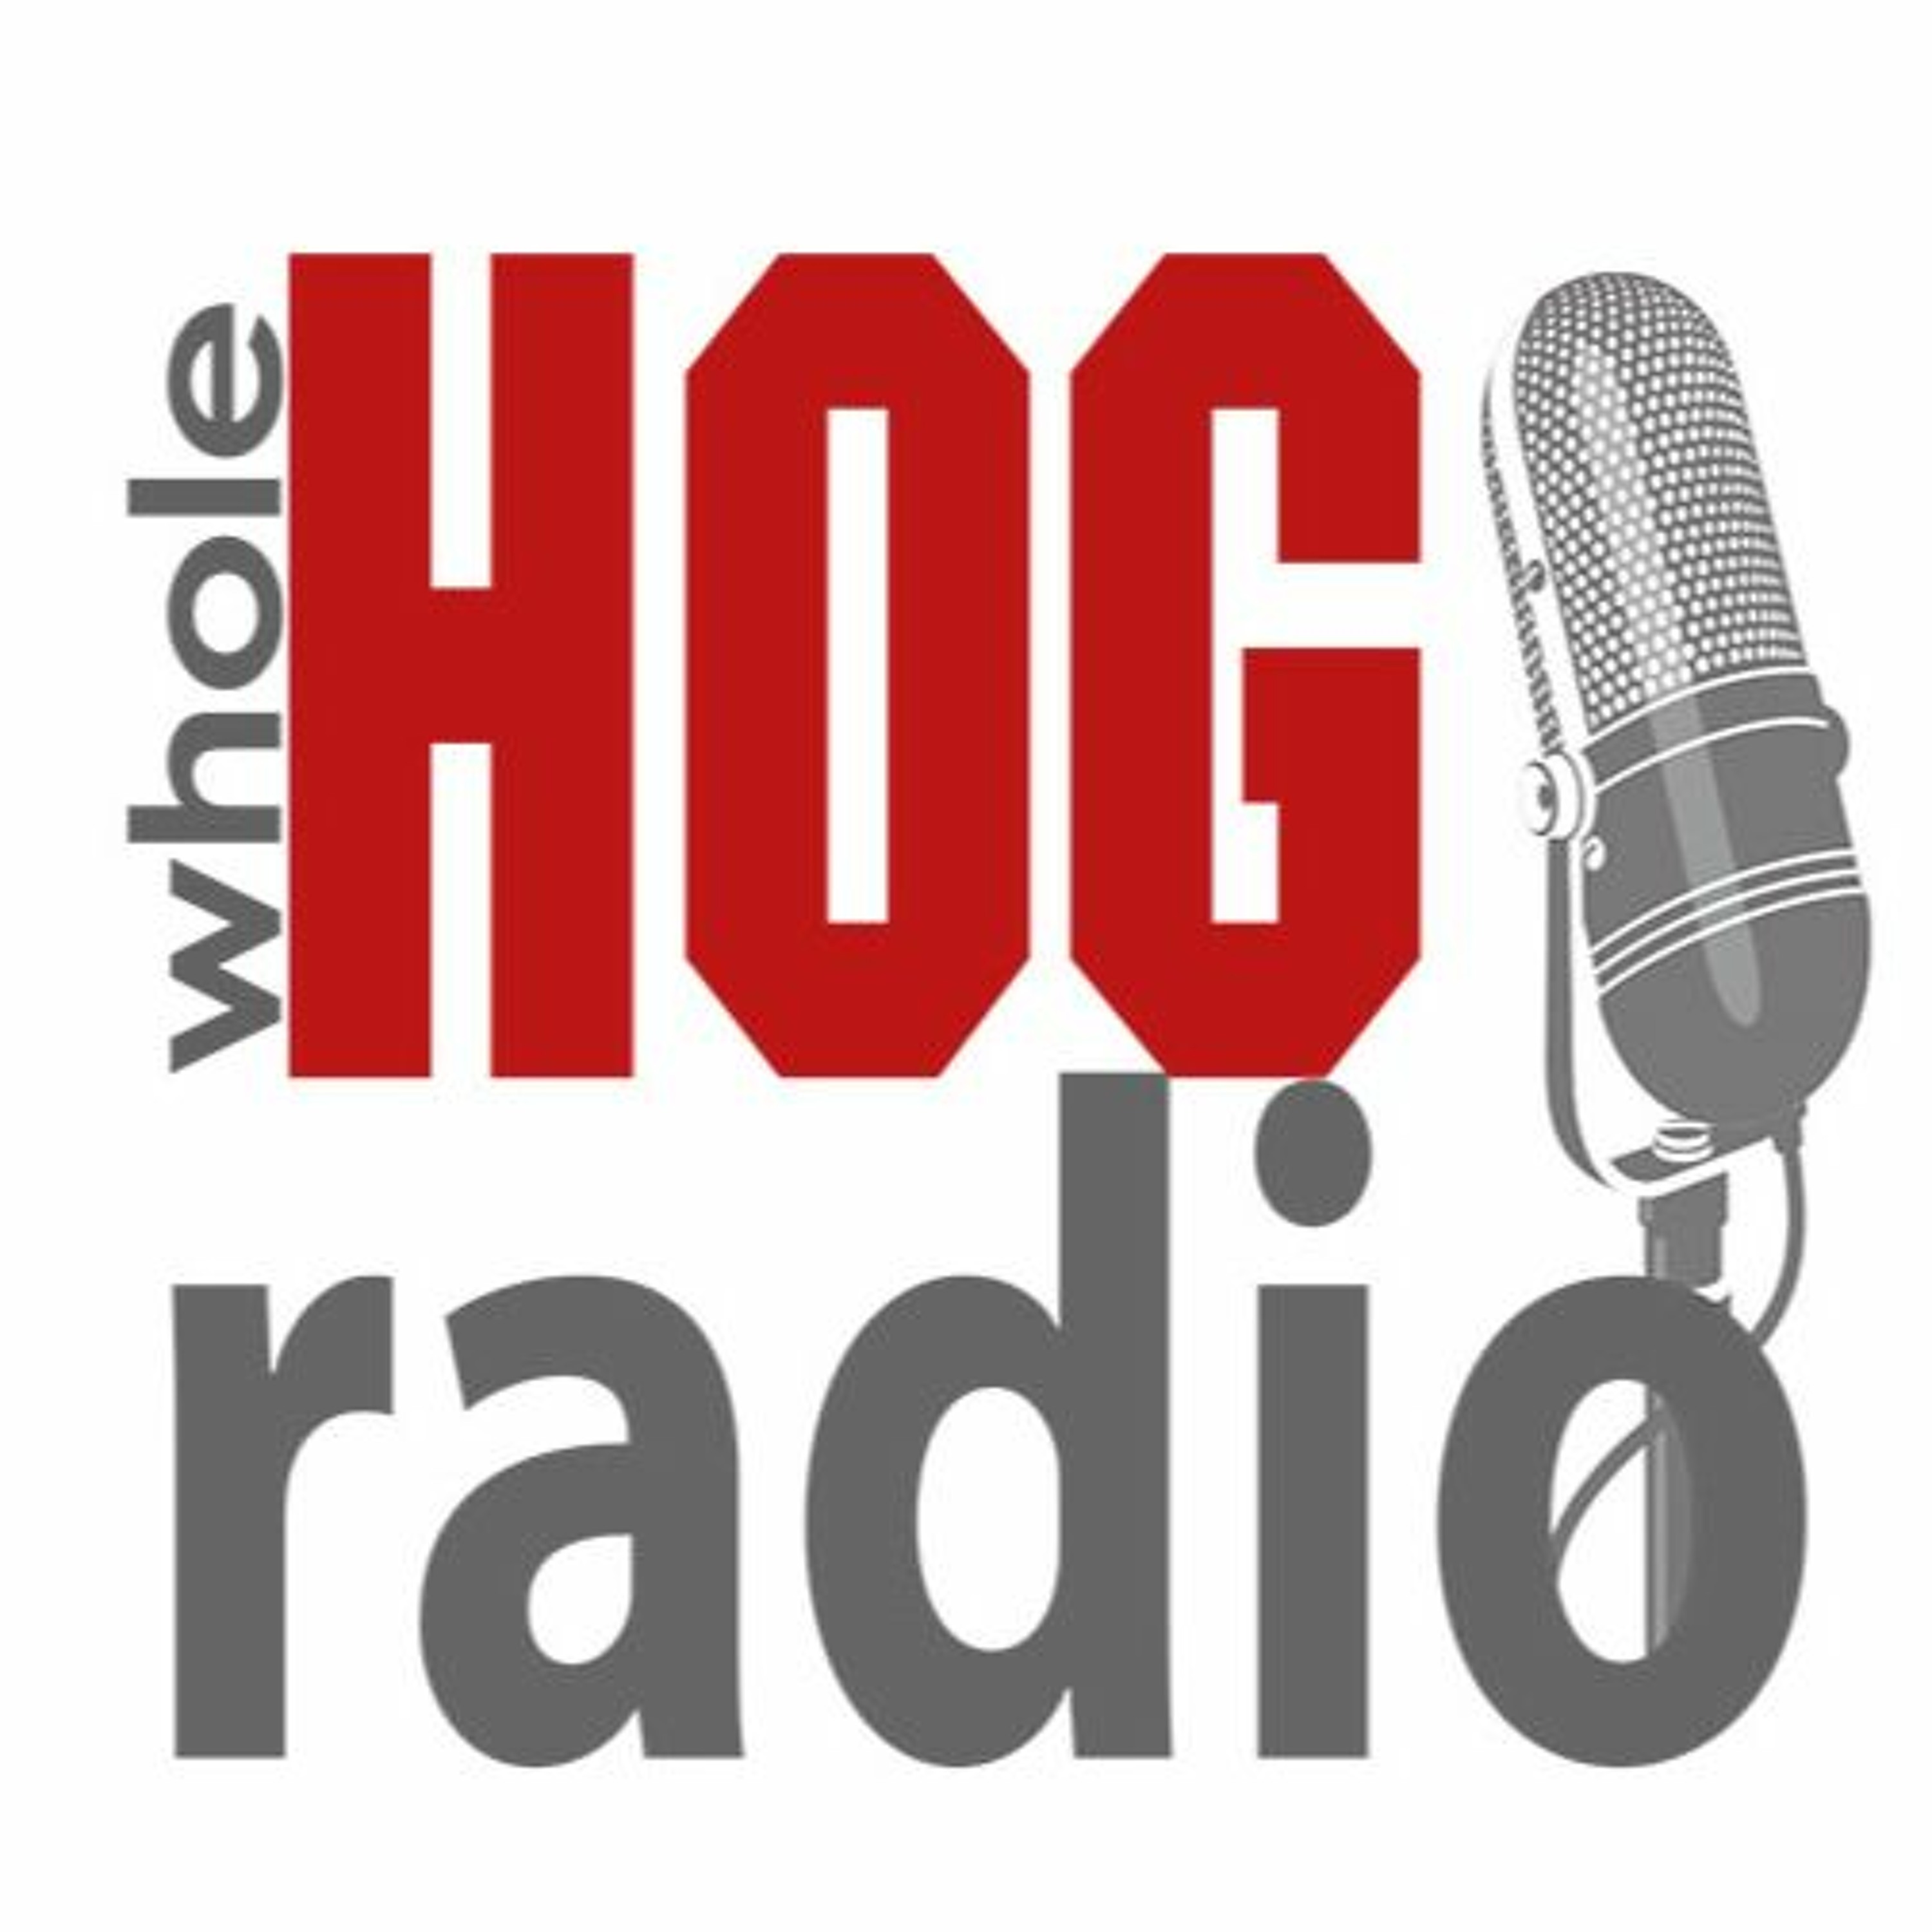 WholeHog Podcast: Arkansas vs. Florida reaction